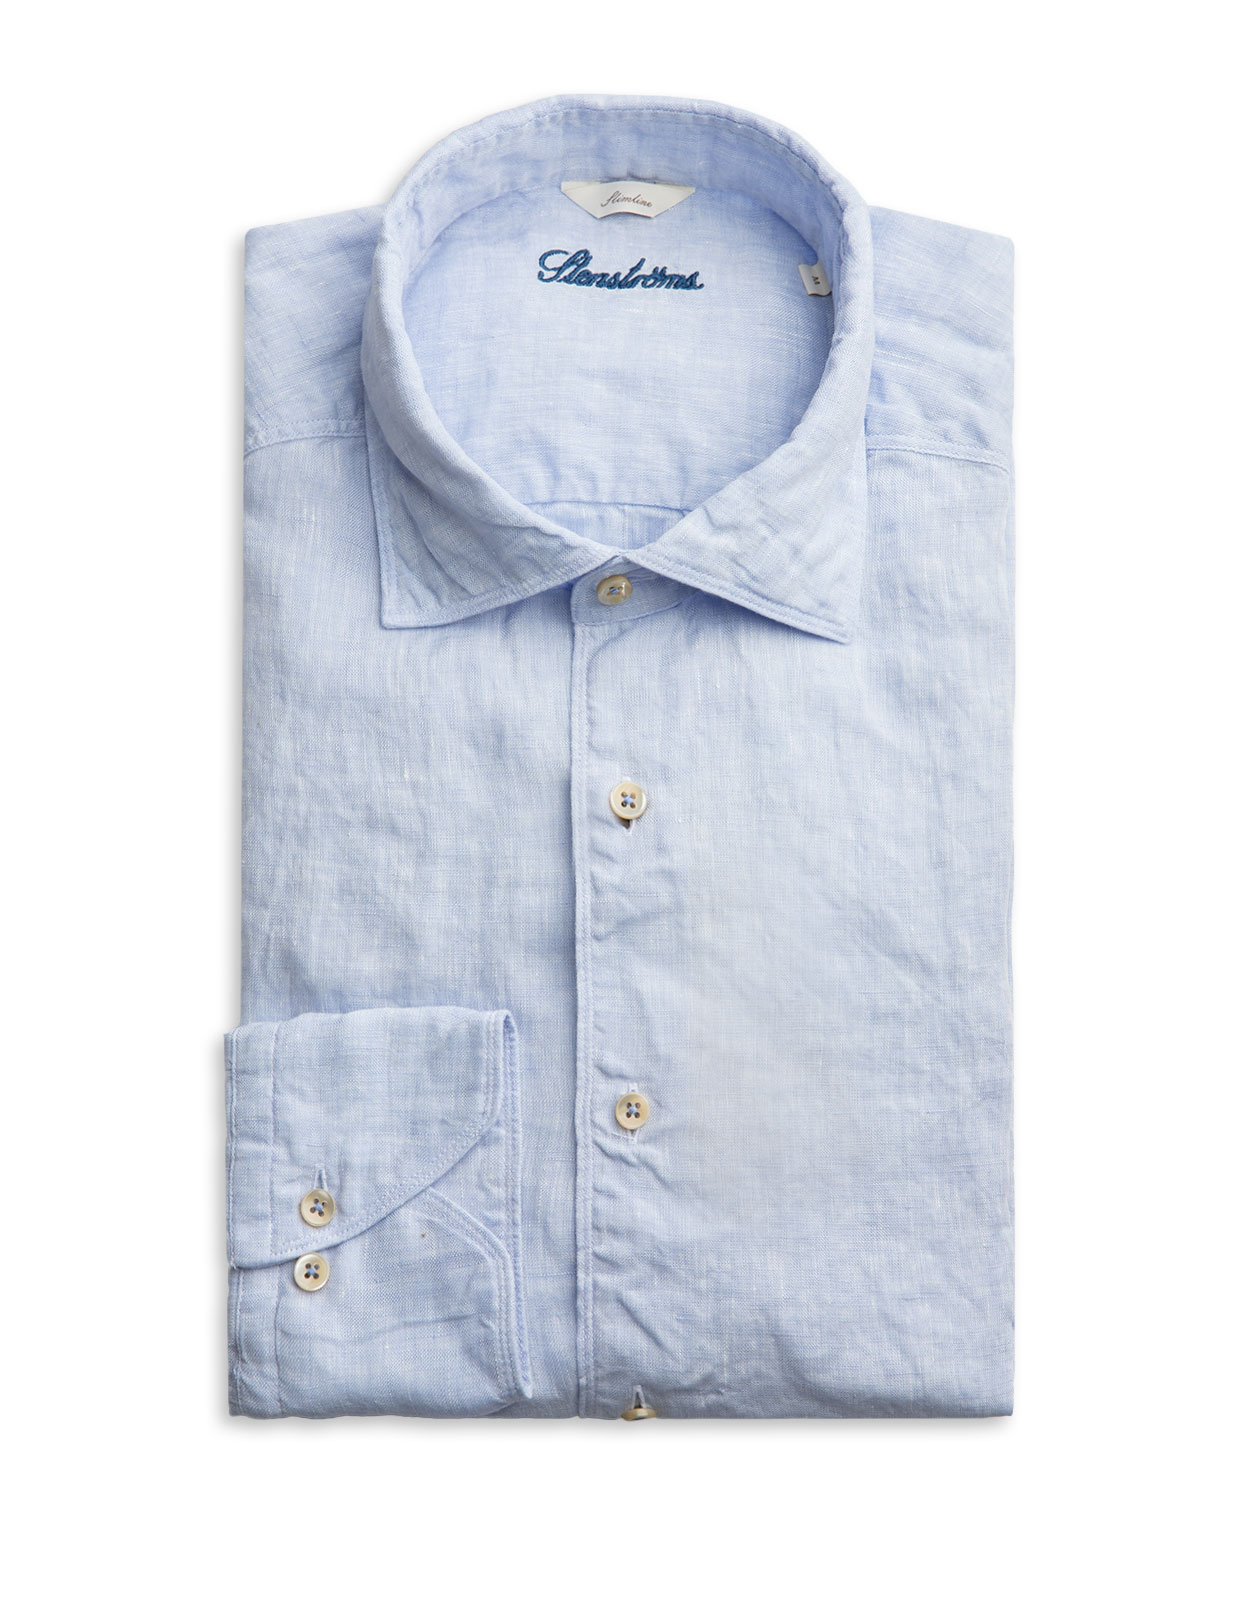 Slimline Linen Shirt Pale Blue